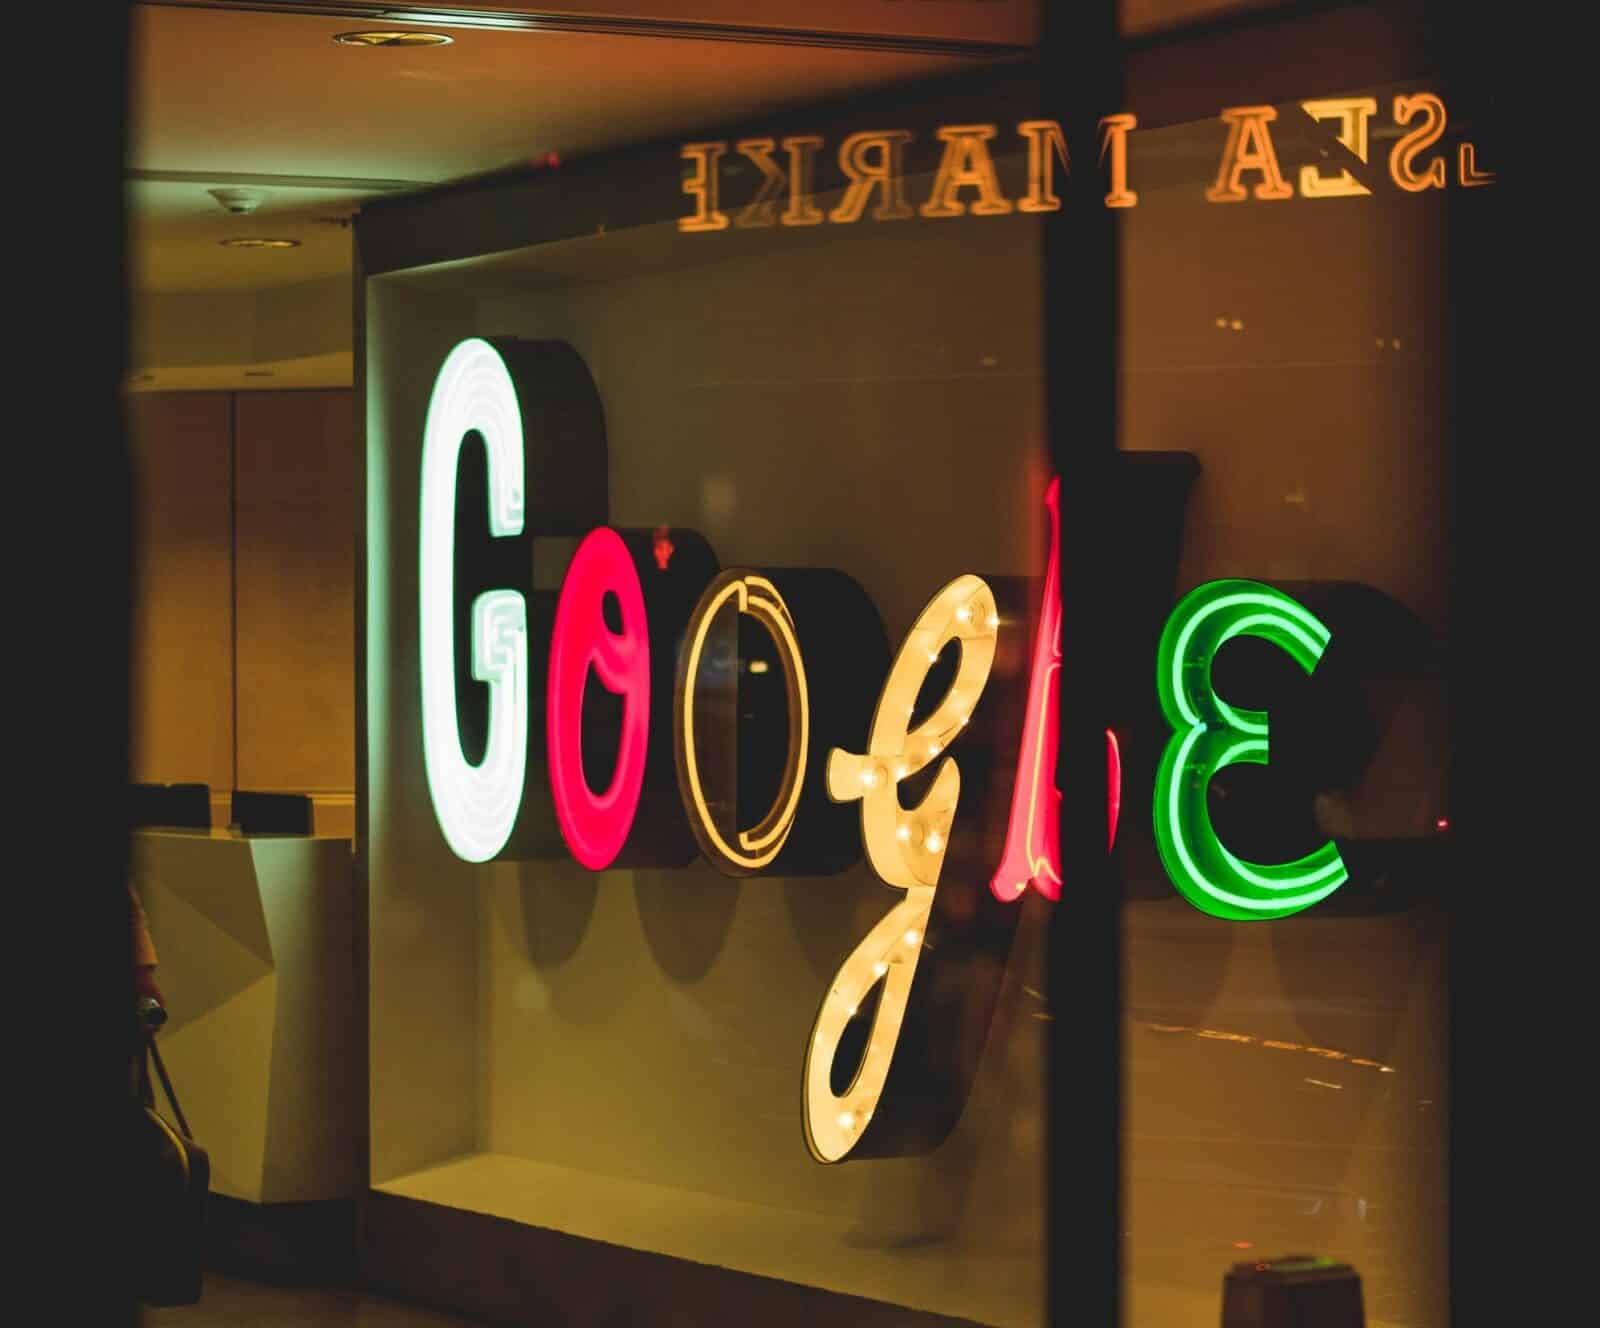 A photo of the google logo